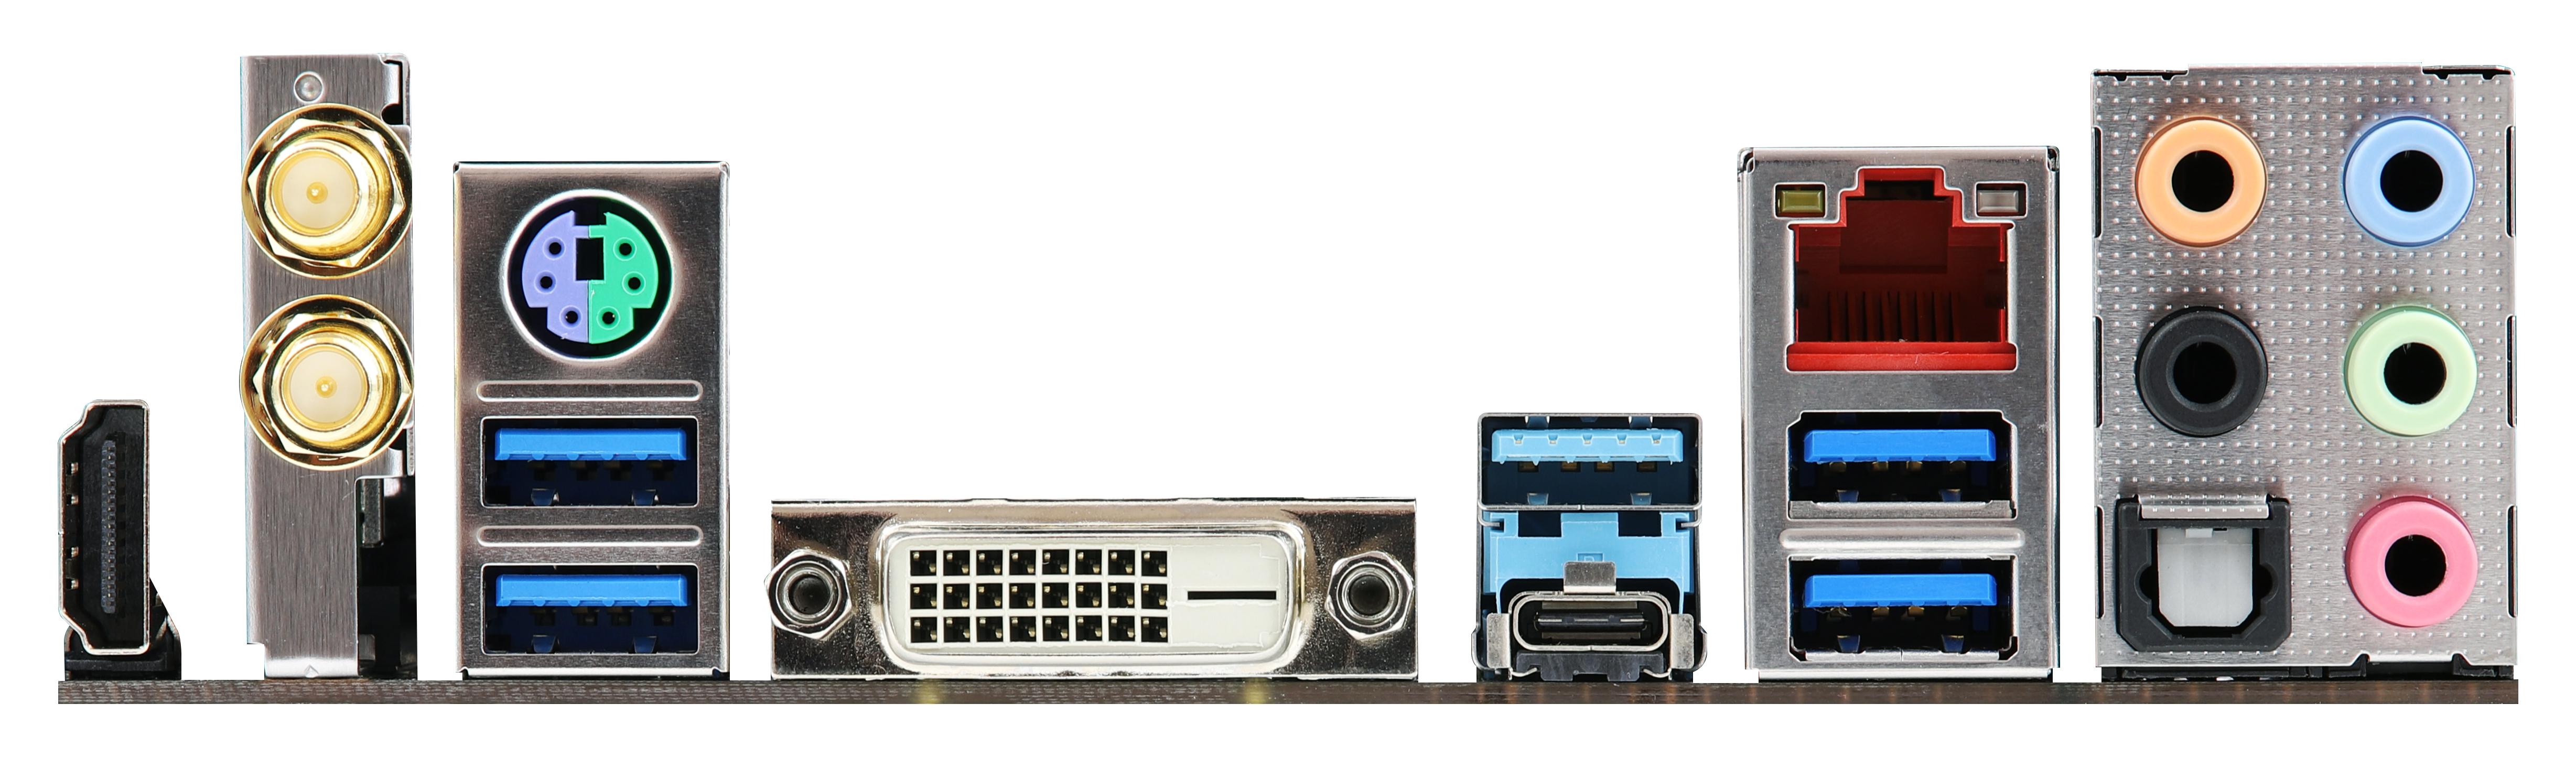 ASRock Z390 Phantom Gaming SLI/ac LGA 1151 Intel Z390 HDMI SATA 6Gb/s USB 3.1 ATX Intel Motherboard 300 Series 